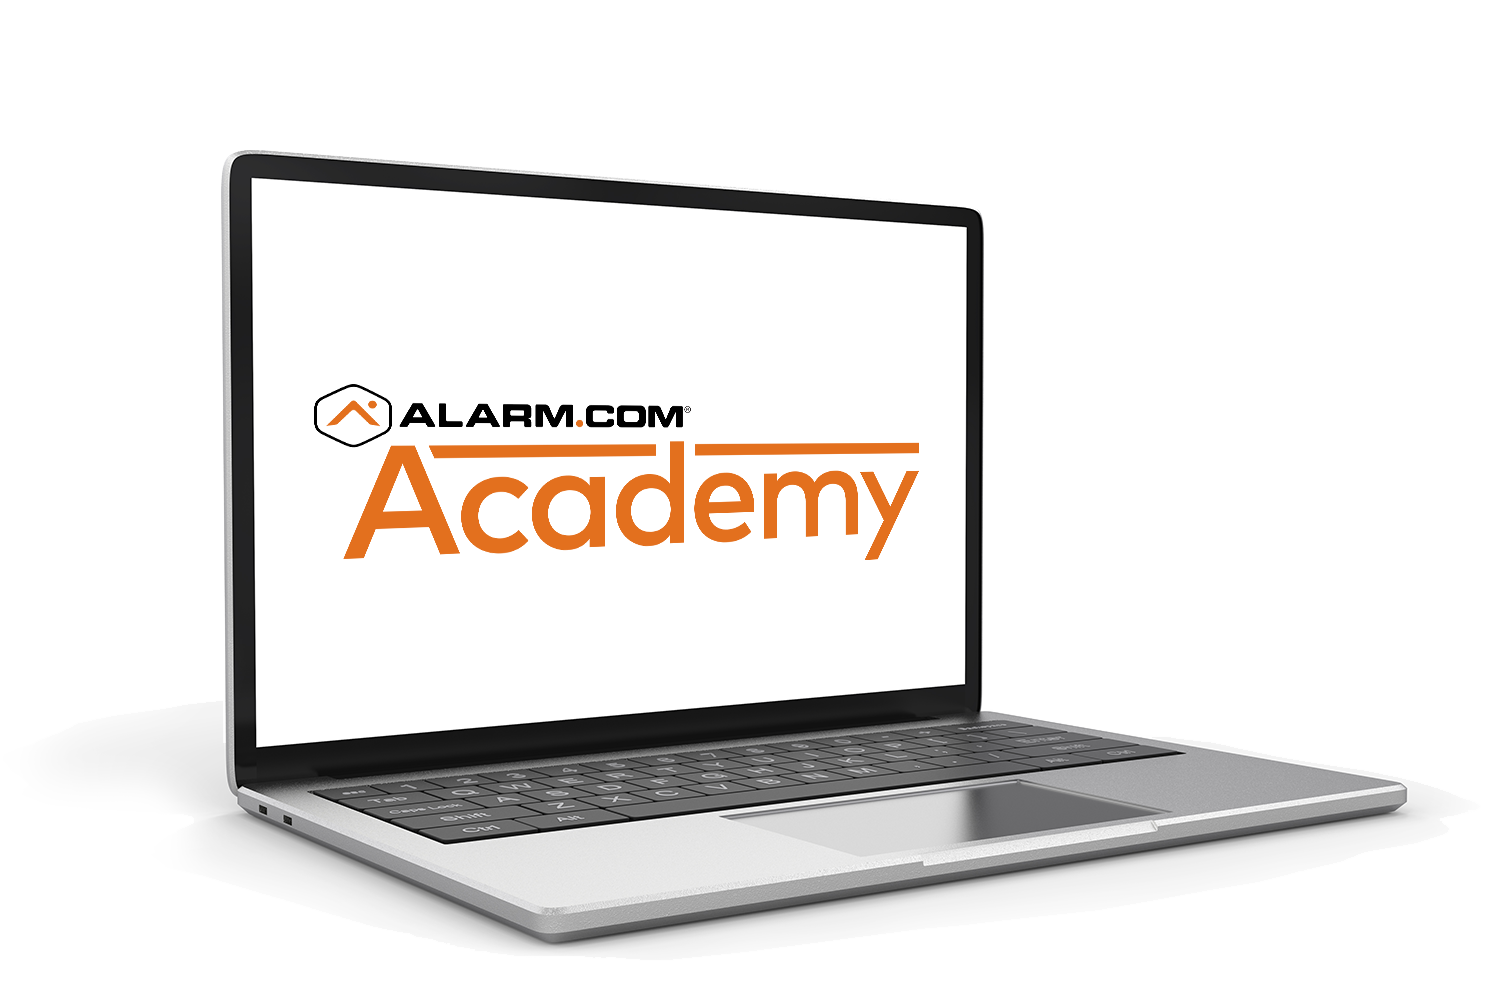 ADC_Academy_MacBook_2